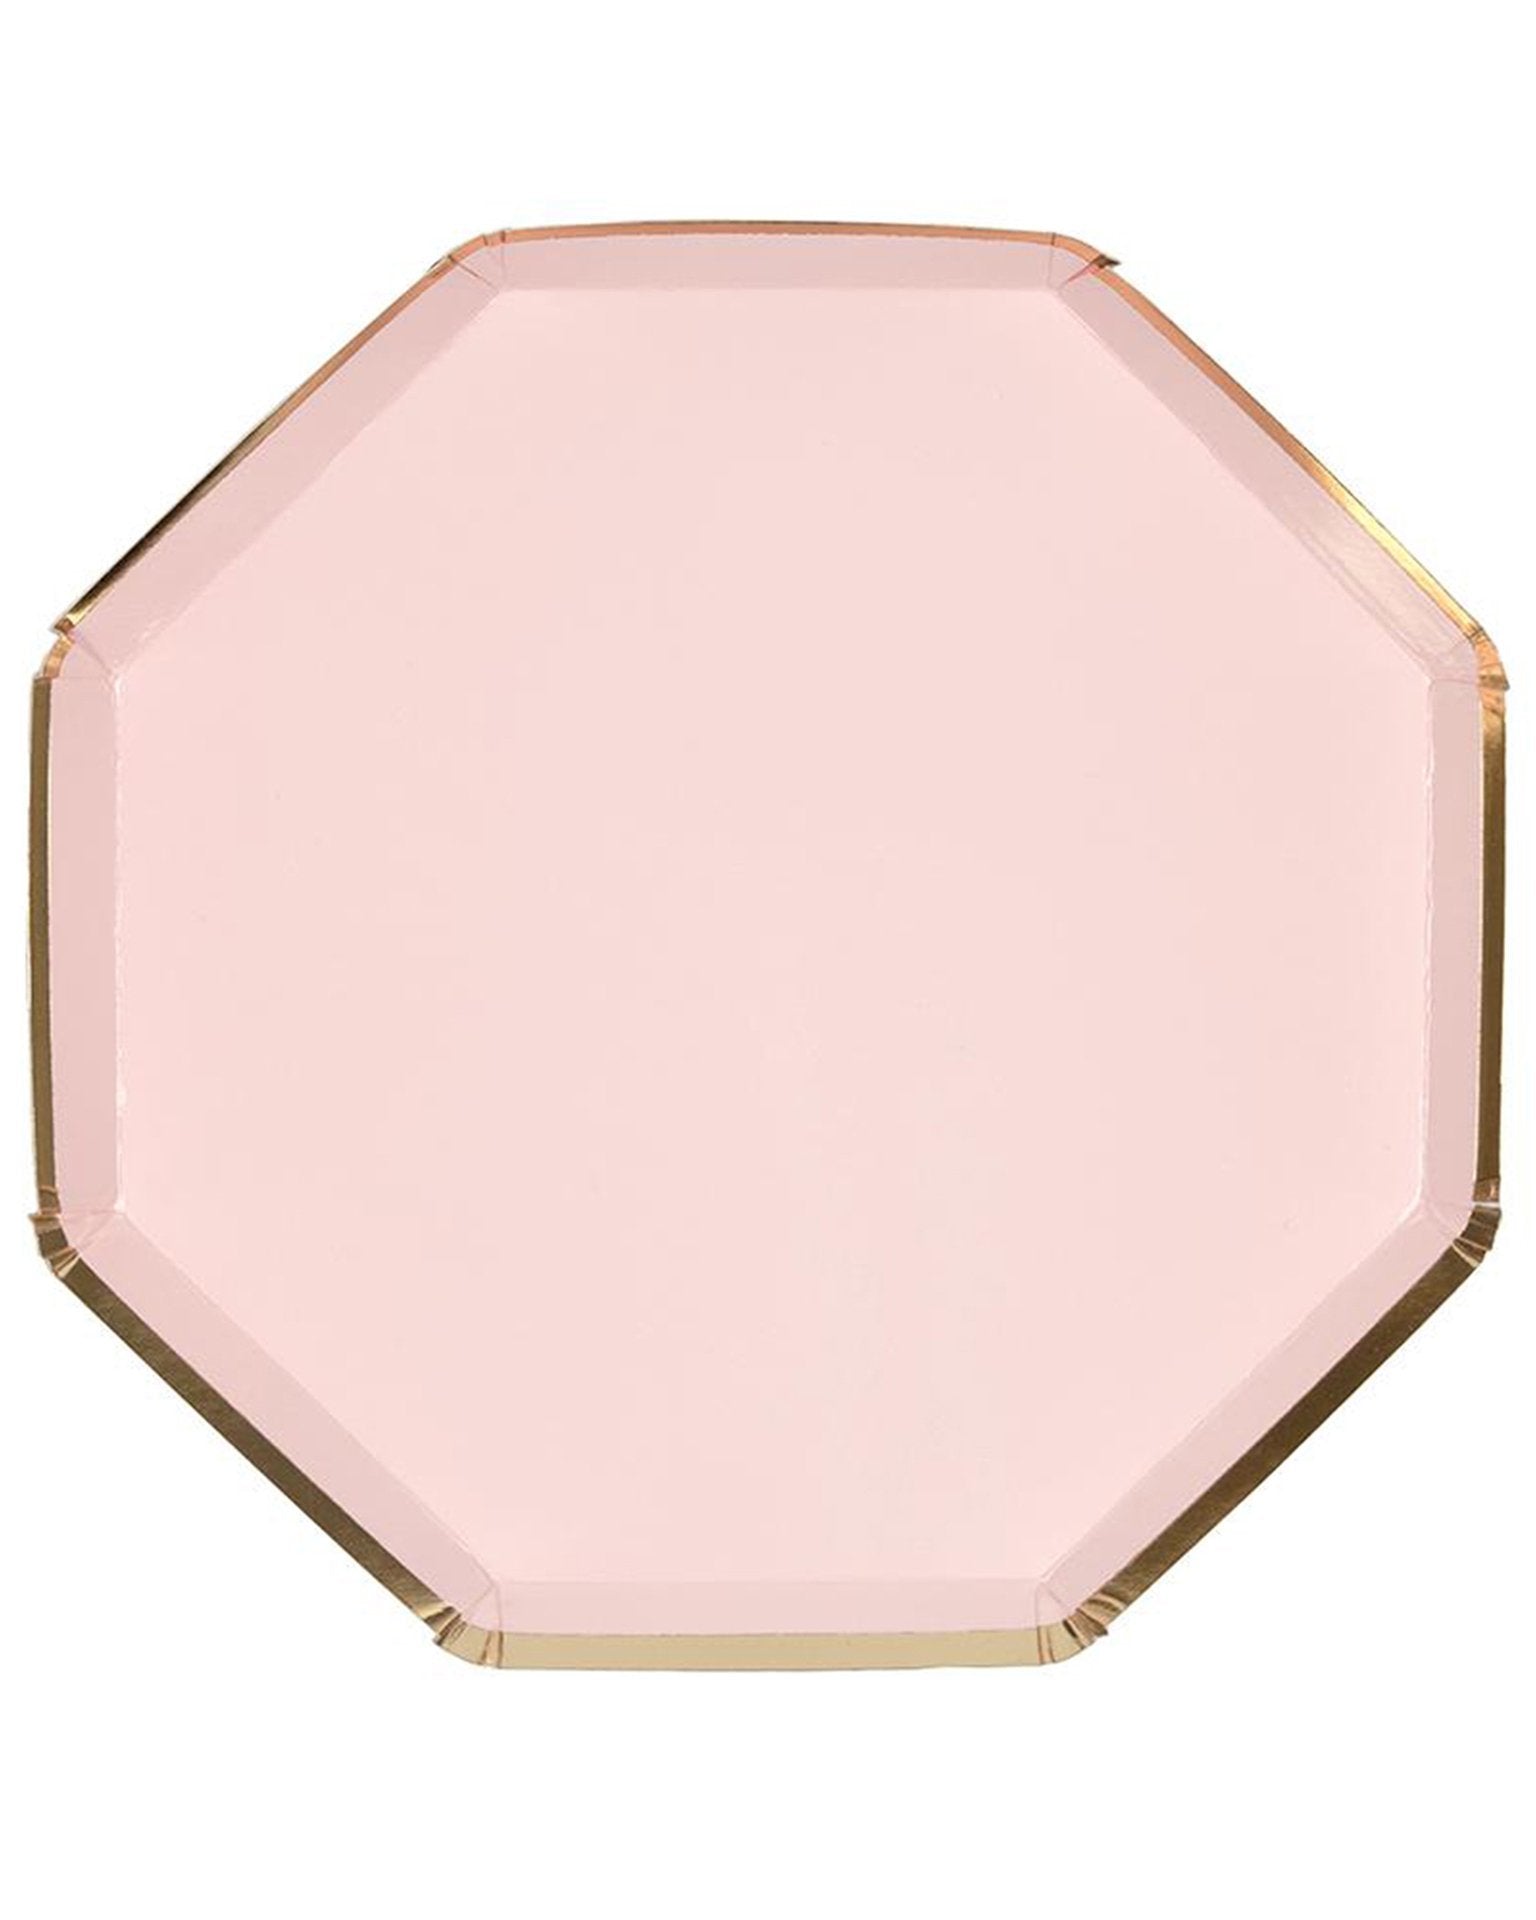 Little meri meri paper+party large pale pink octagonal plate